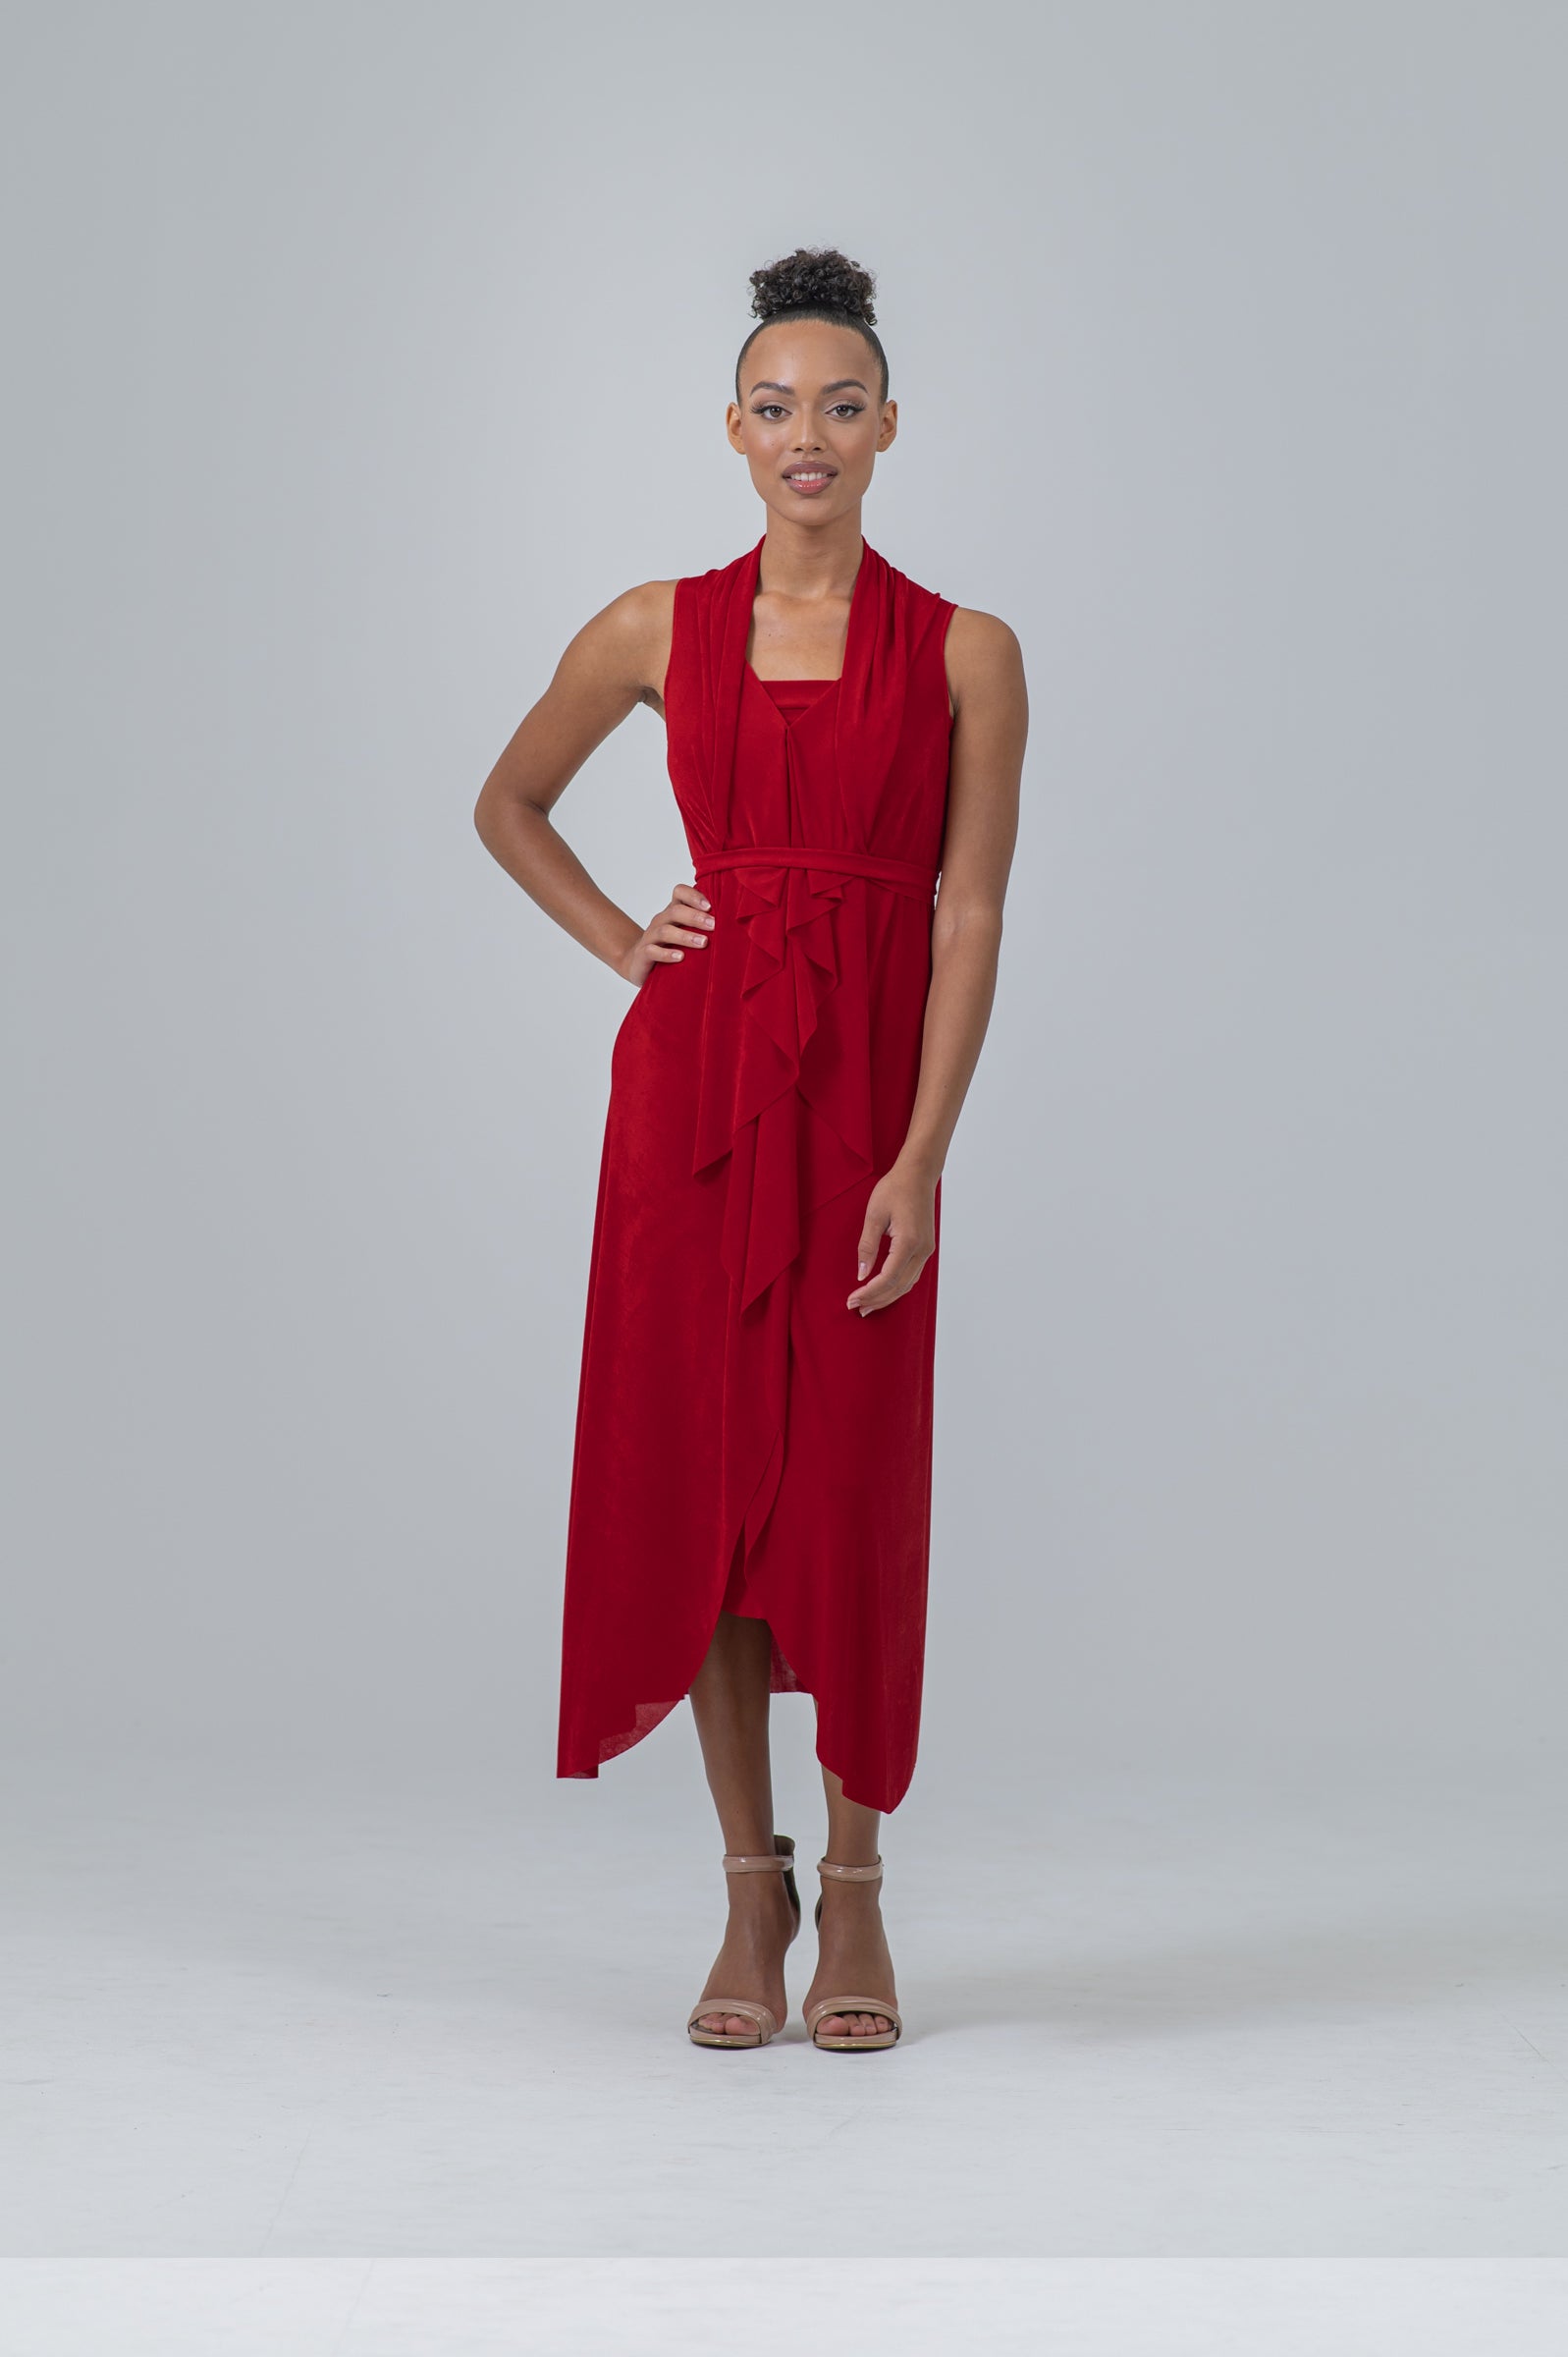 Sleeveless Dress in RED (2 Piece Set, Wear it Endless Ways!)